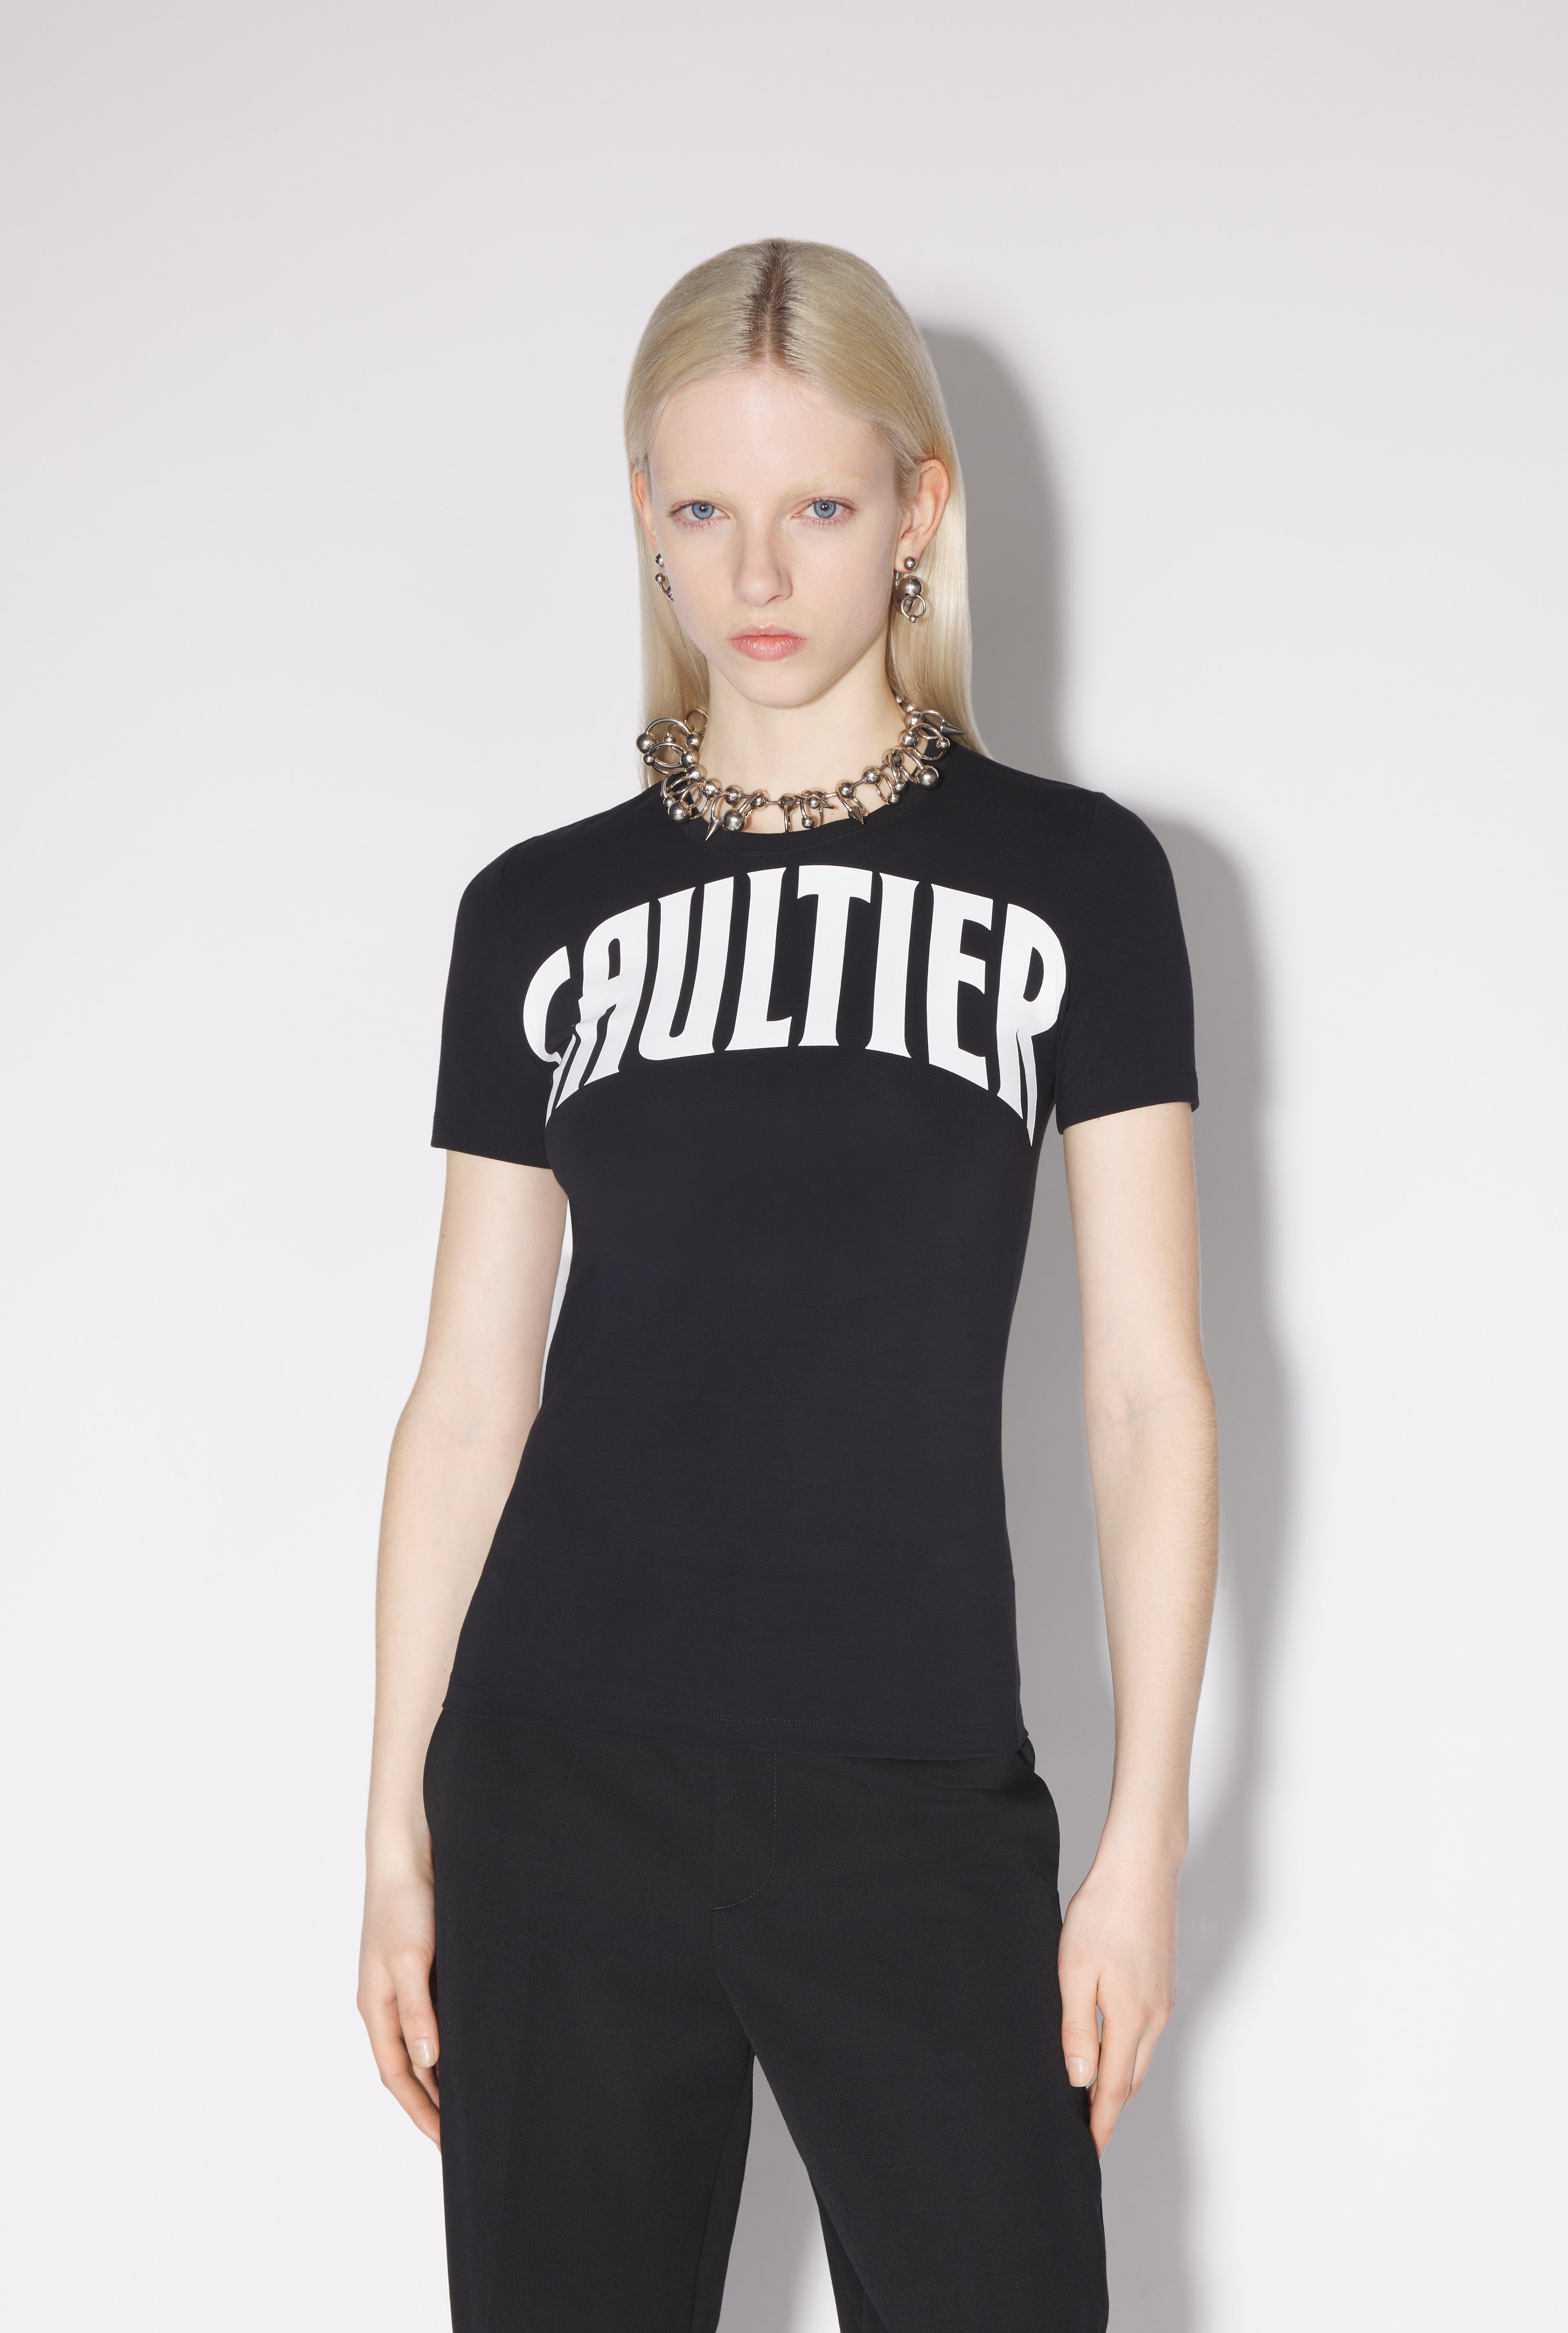 The Black Gaultier T-Shirt